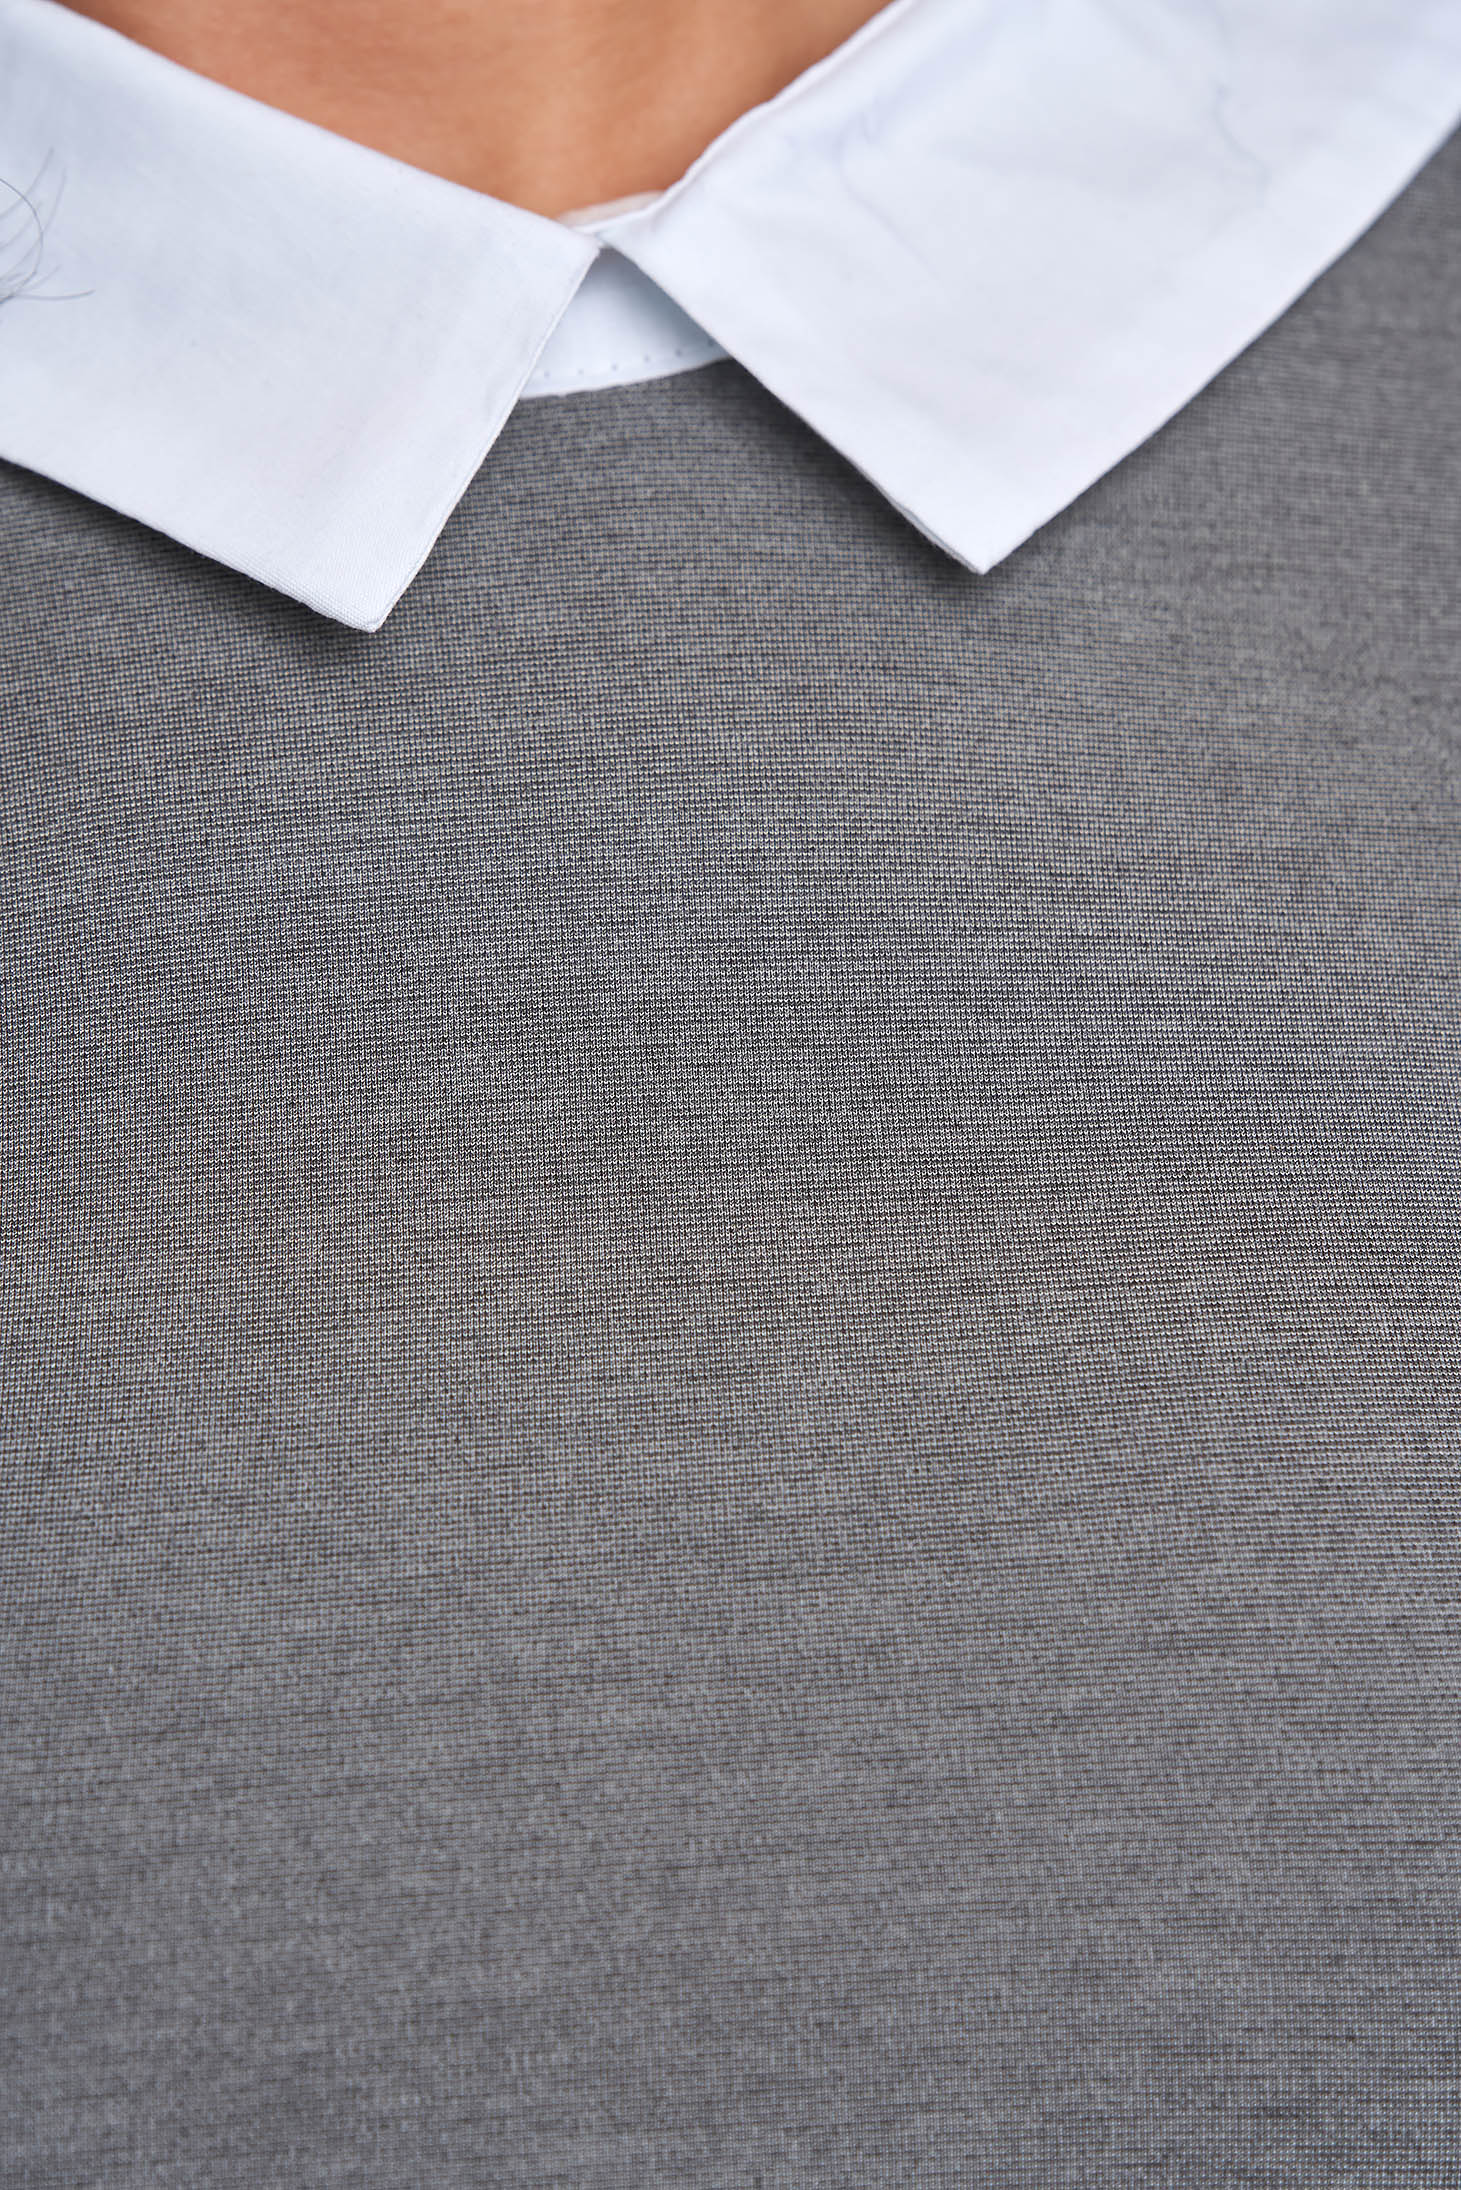 Rochie din tricot subtire gri scurta cu guler tip camasa - SunShine 5 - StarShinerS.ro